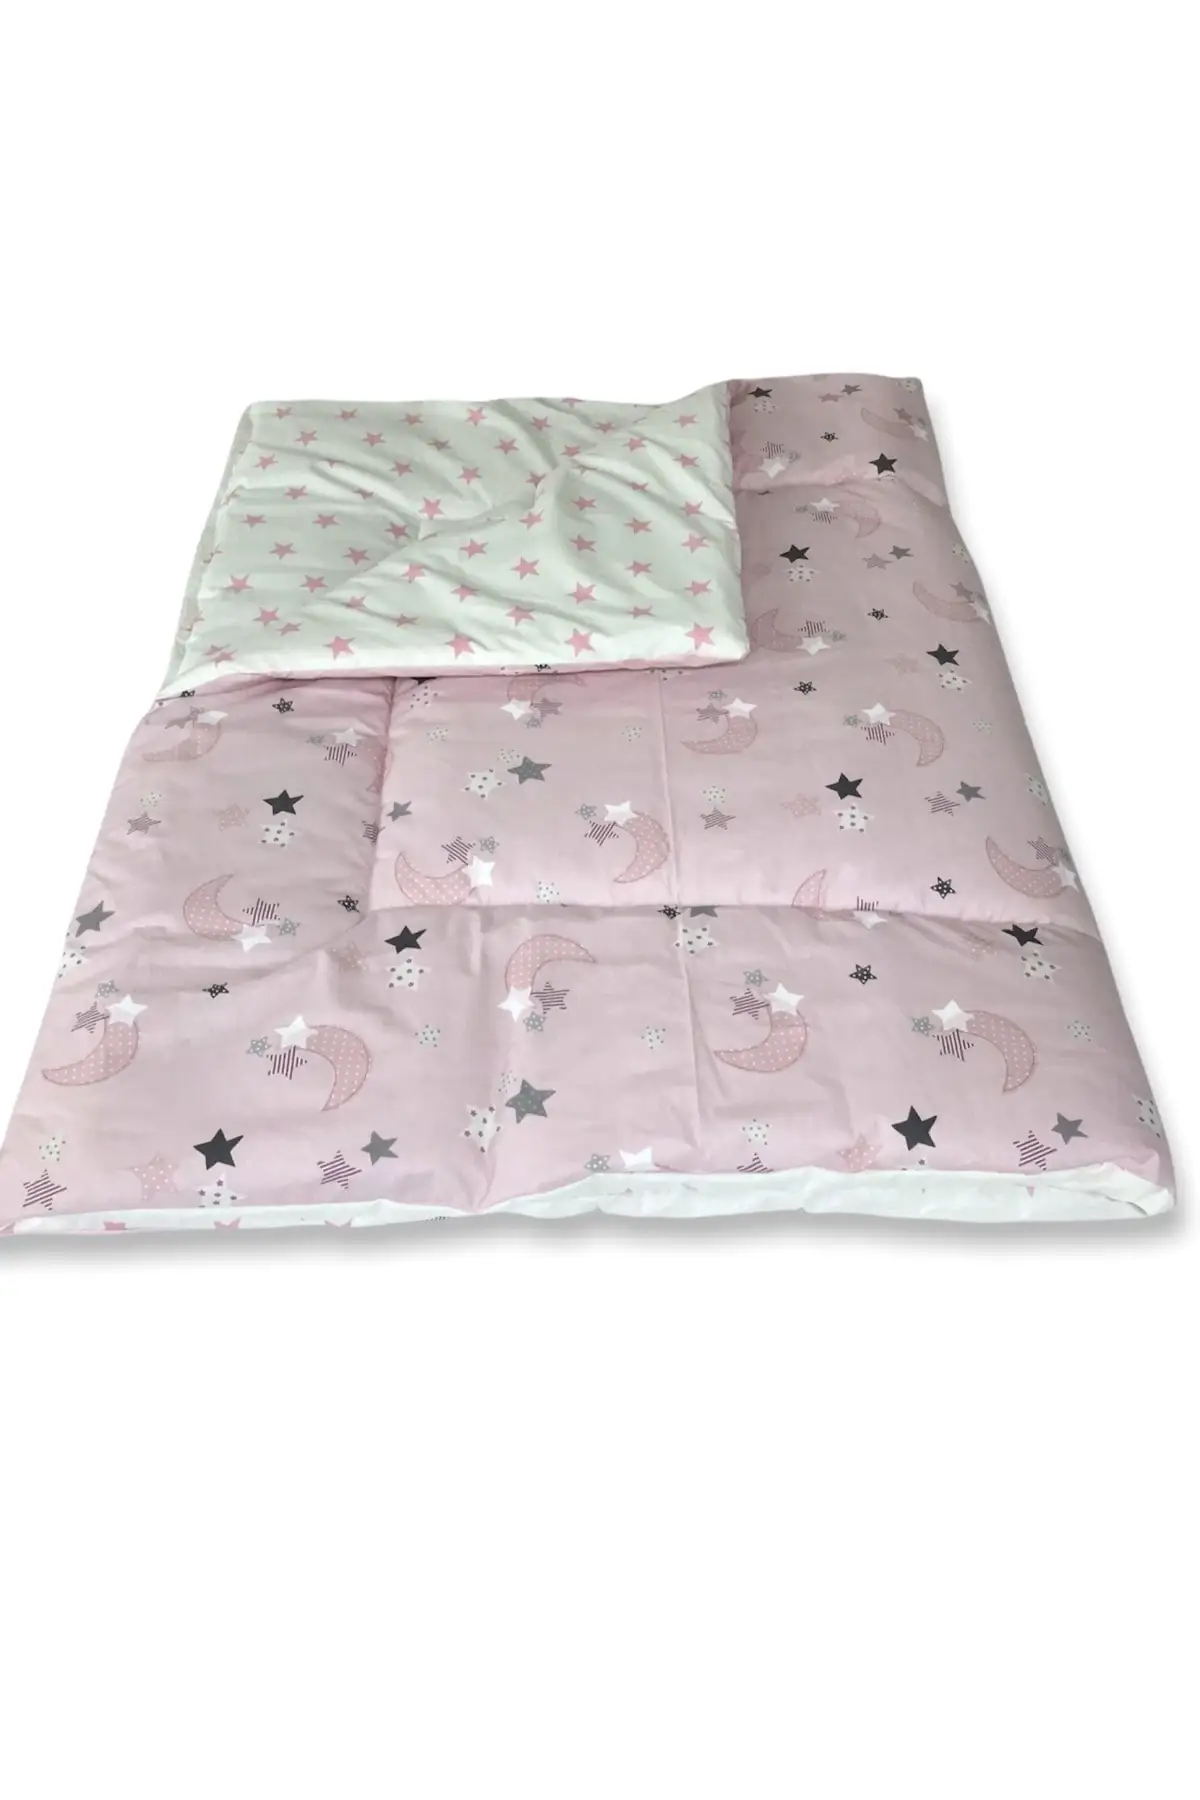 100 cotton Baby Child Quilt 130x200 cm Sizes Pink Crescent Star Fiber Cotton Baby & Kids Quilt home